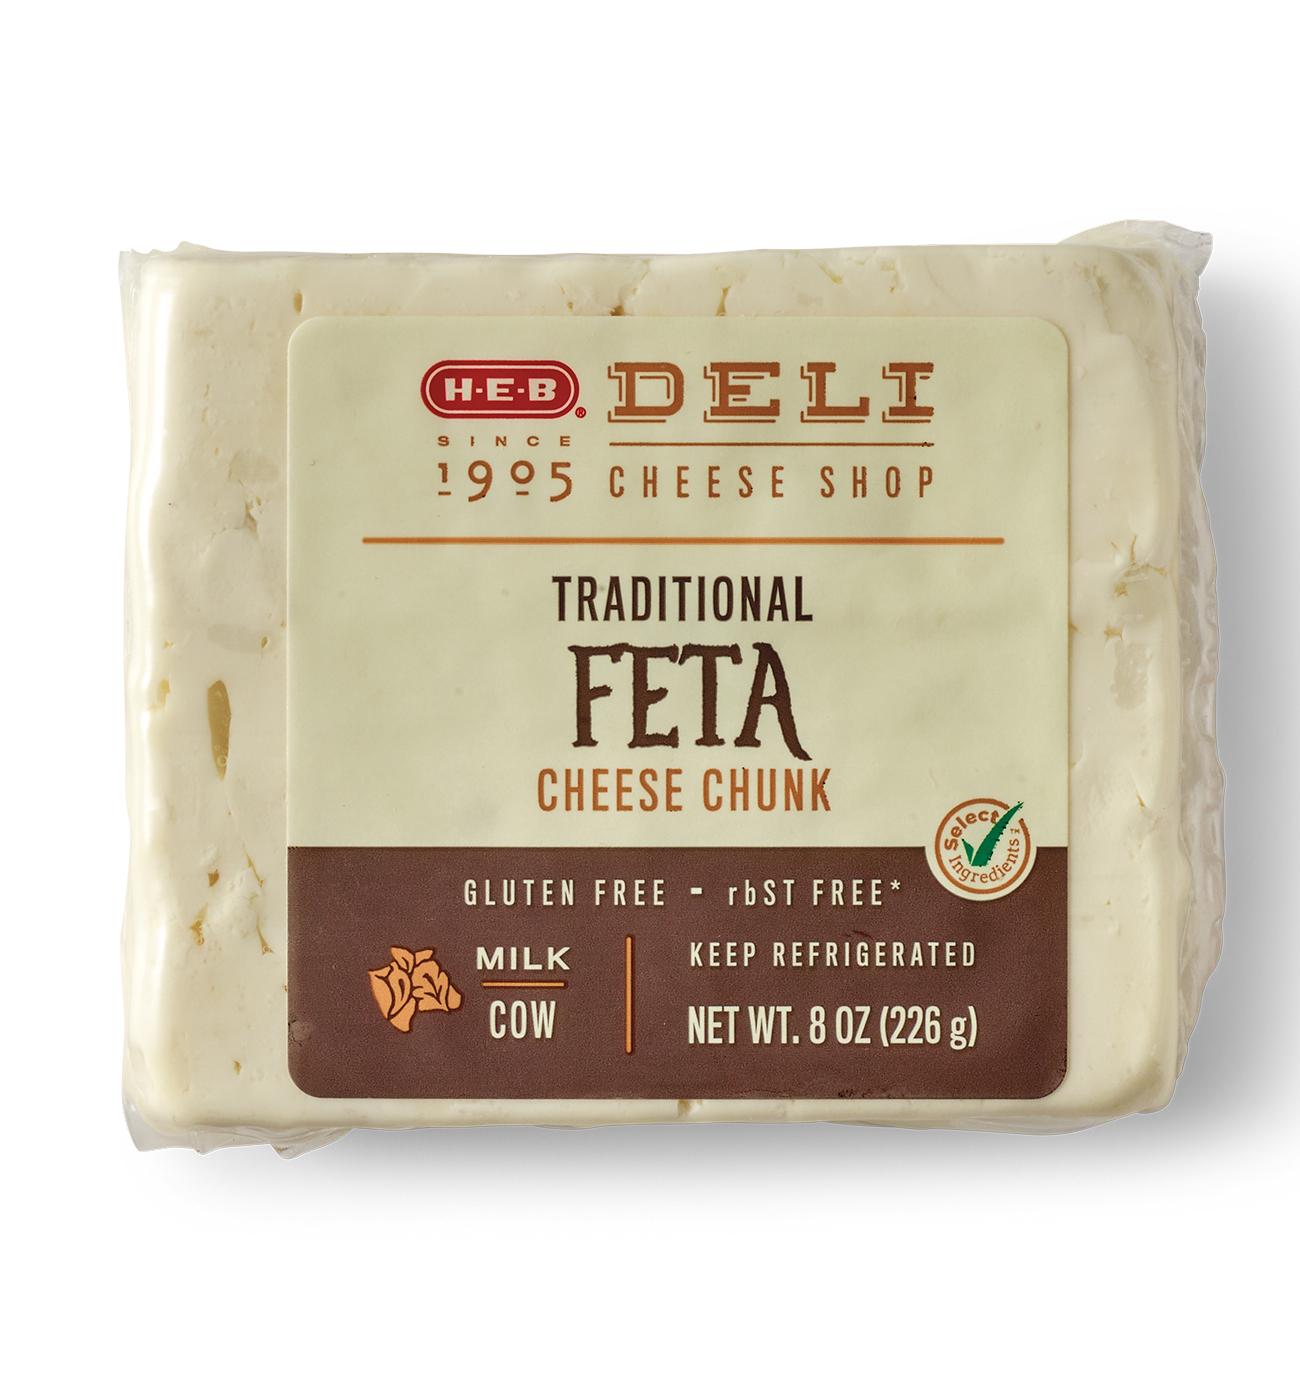 H-E-B Deli Traditional Feta Cheese Chunk; image 2 of 4